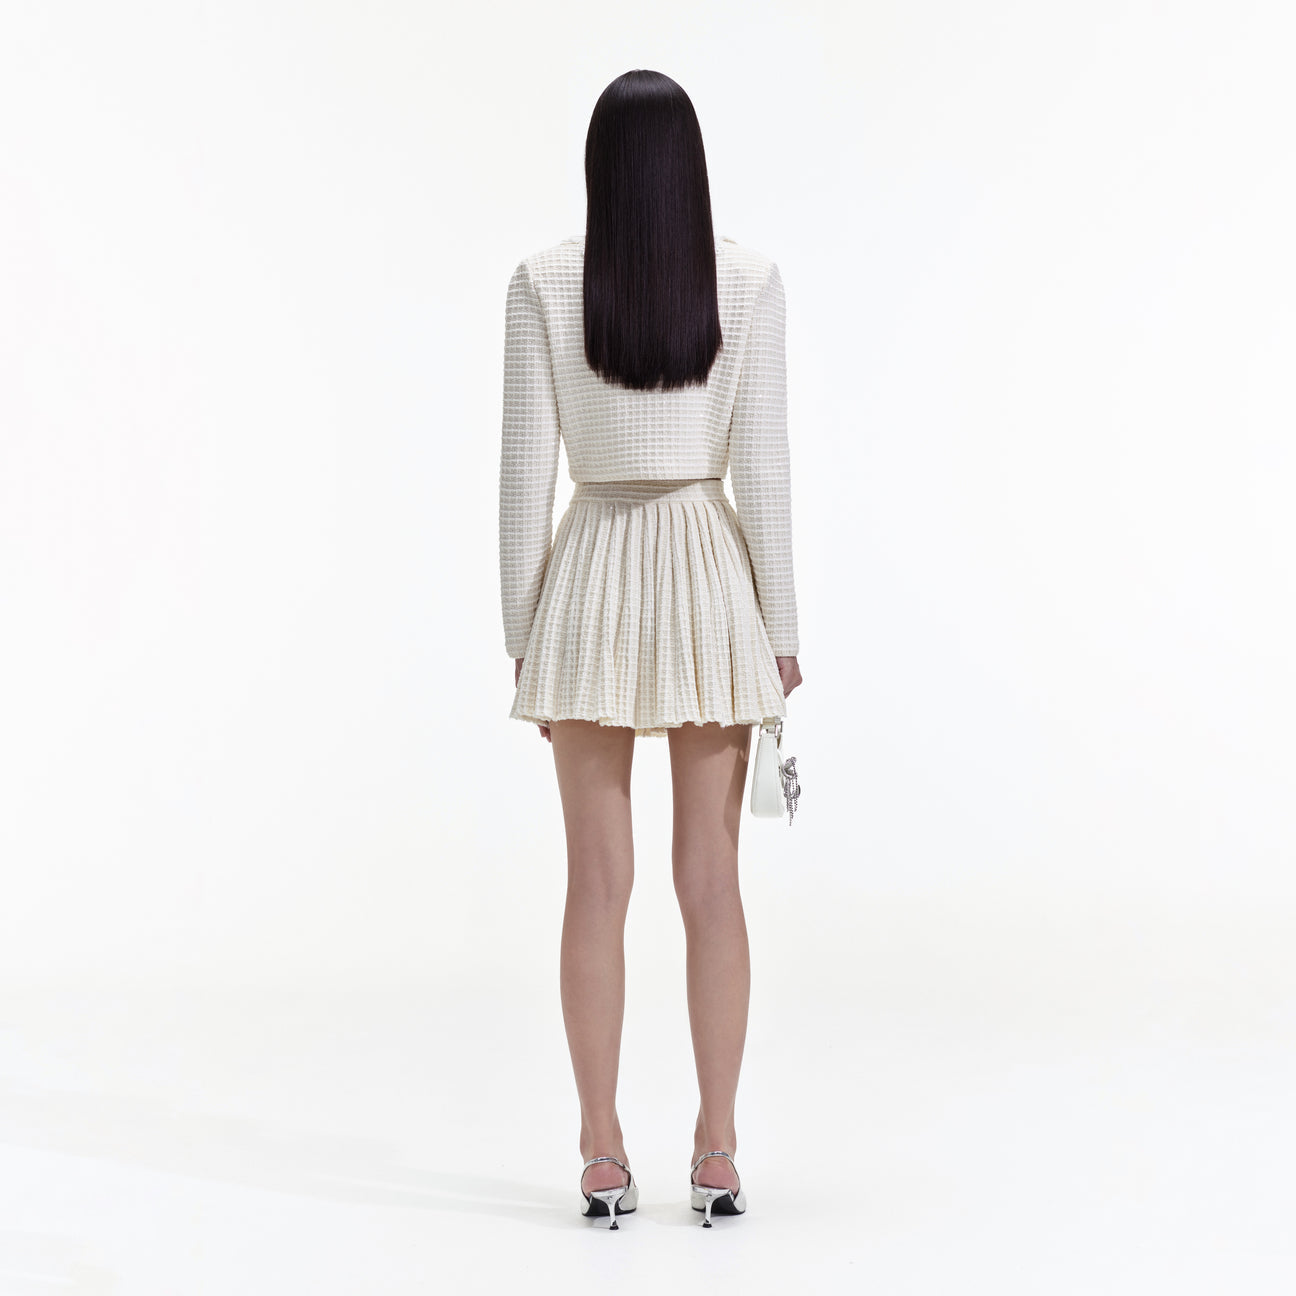 SP Cream Knit Cardigan & Mini Skirt Set